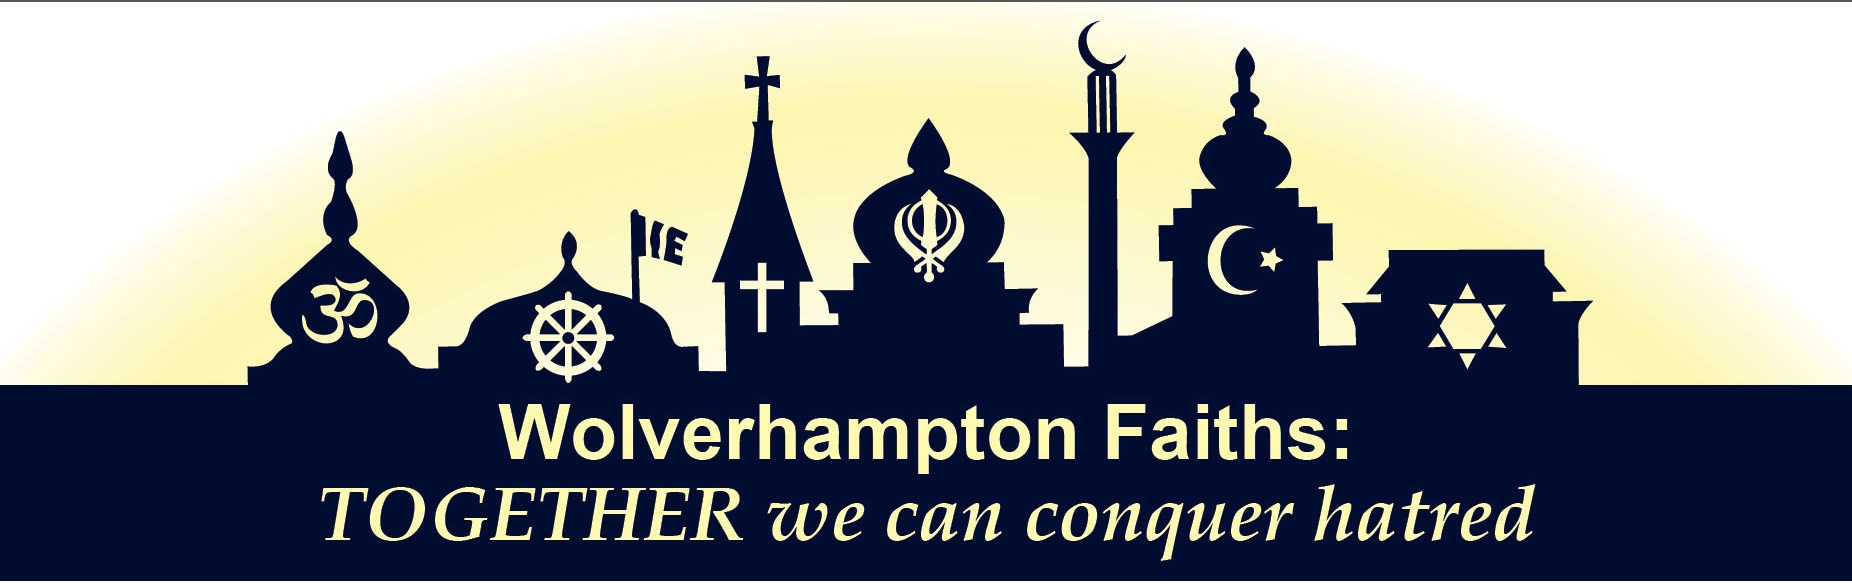 Open Wolverhampton Faiths